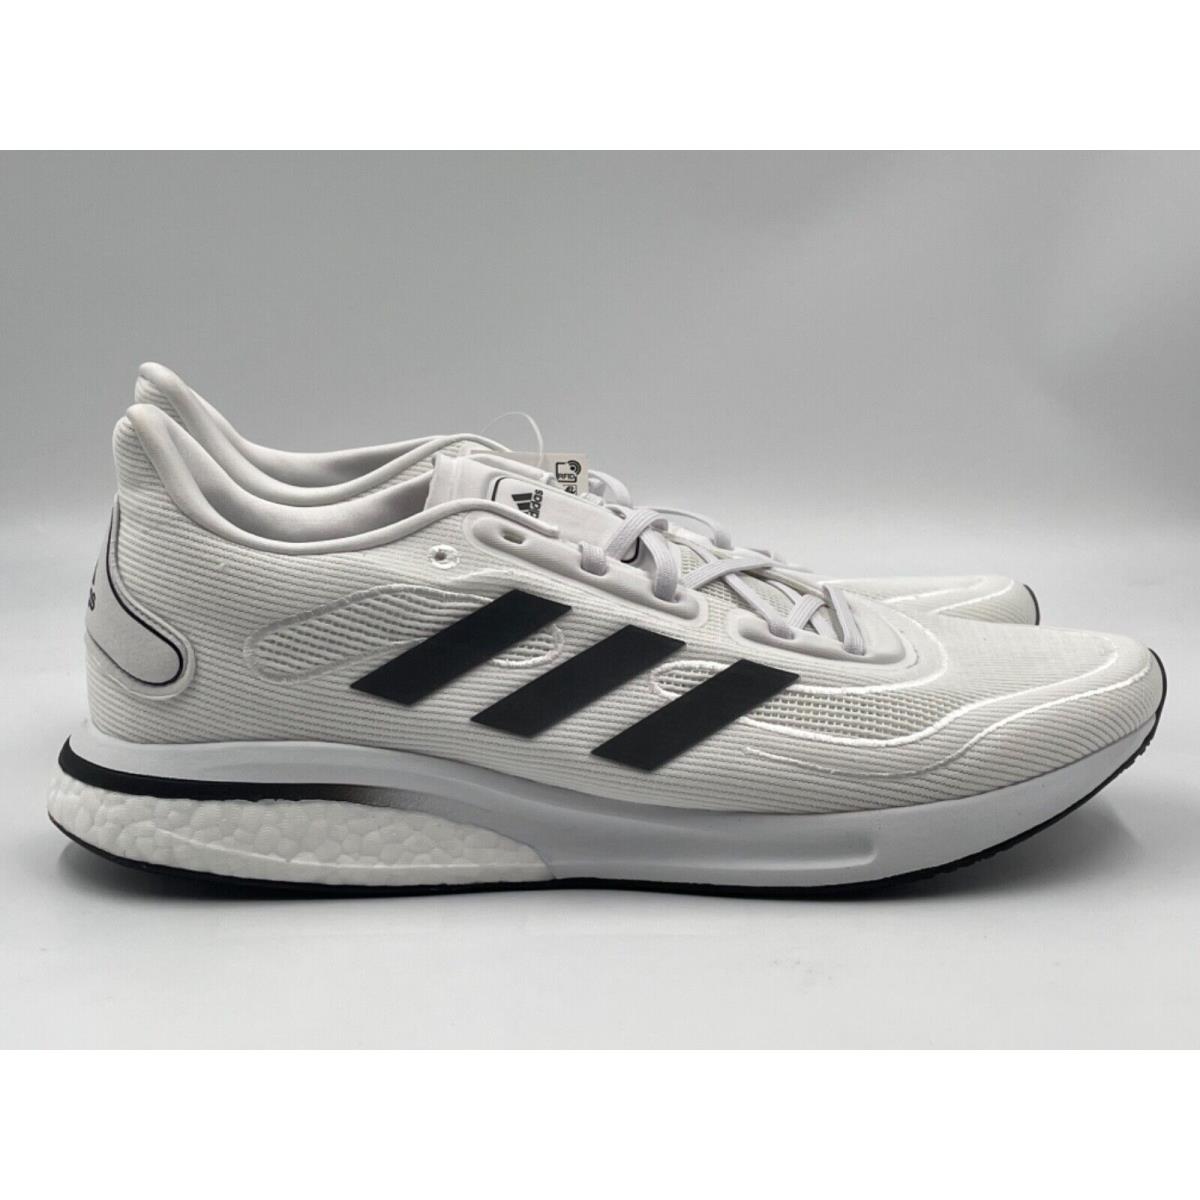 Adidas Supernova Men Sz 11.5 Casual Running Shoe White Black Trainer Sneaker